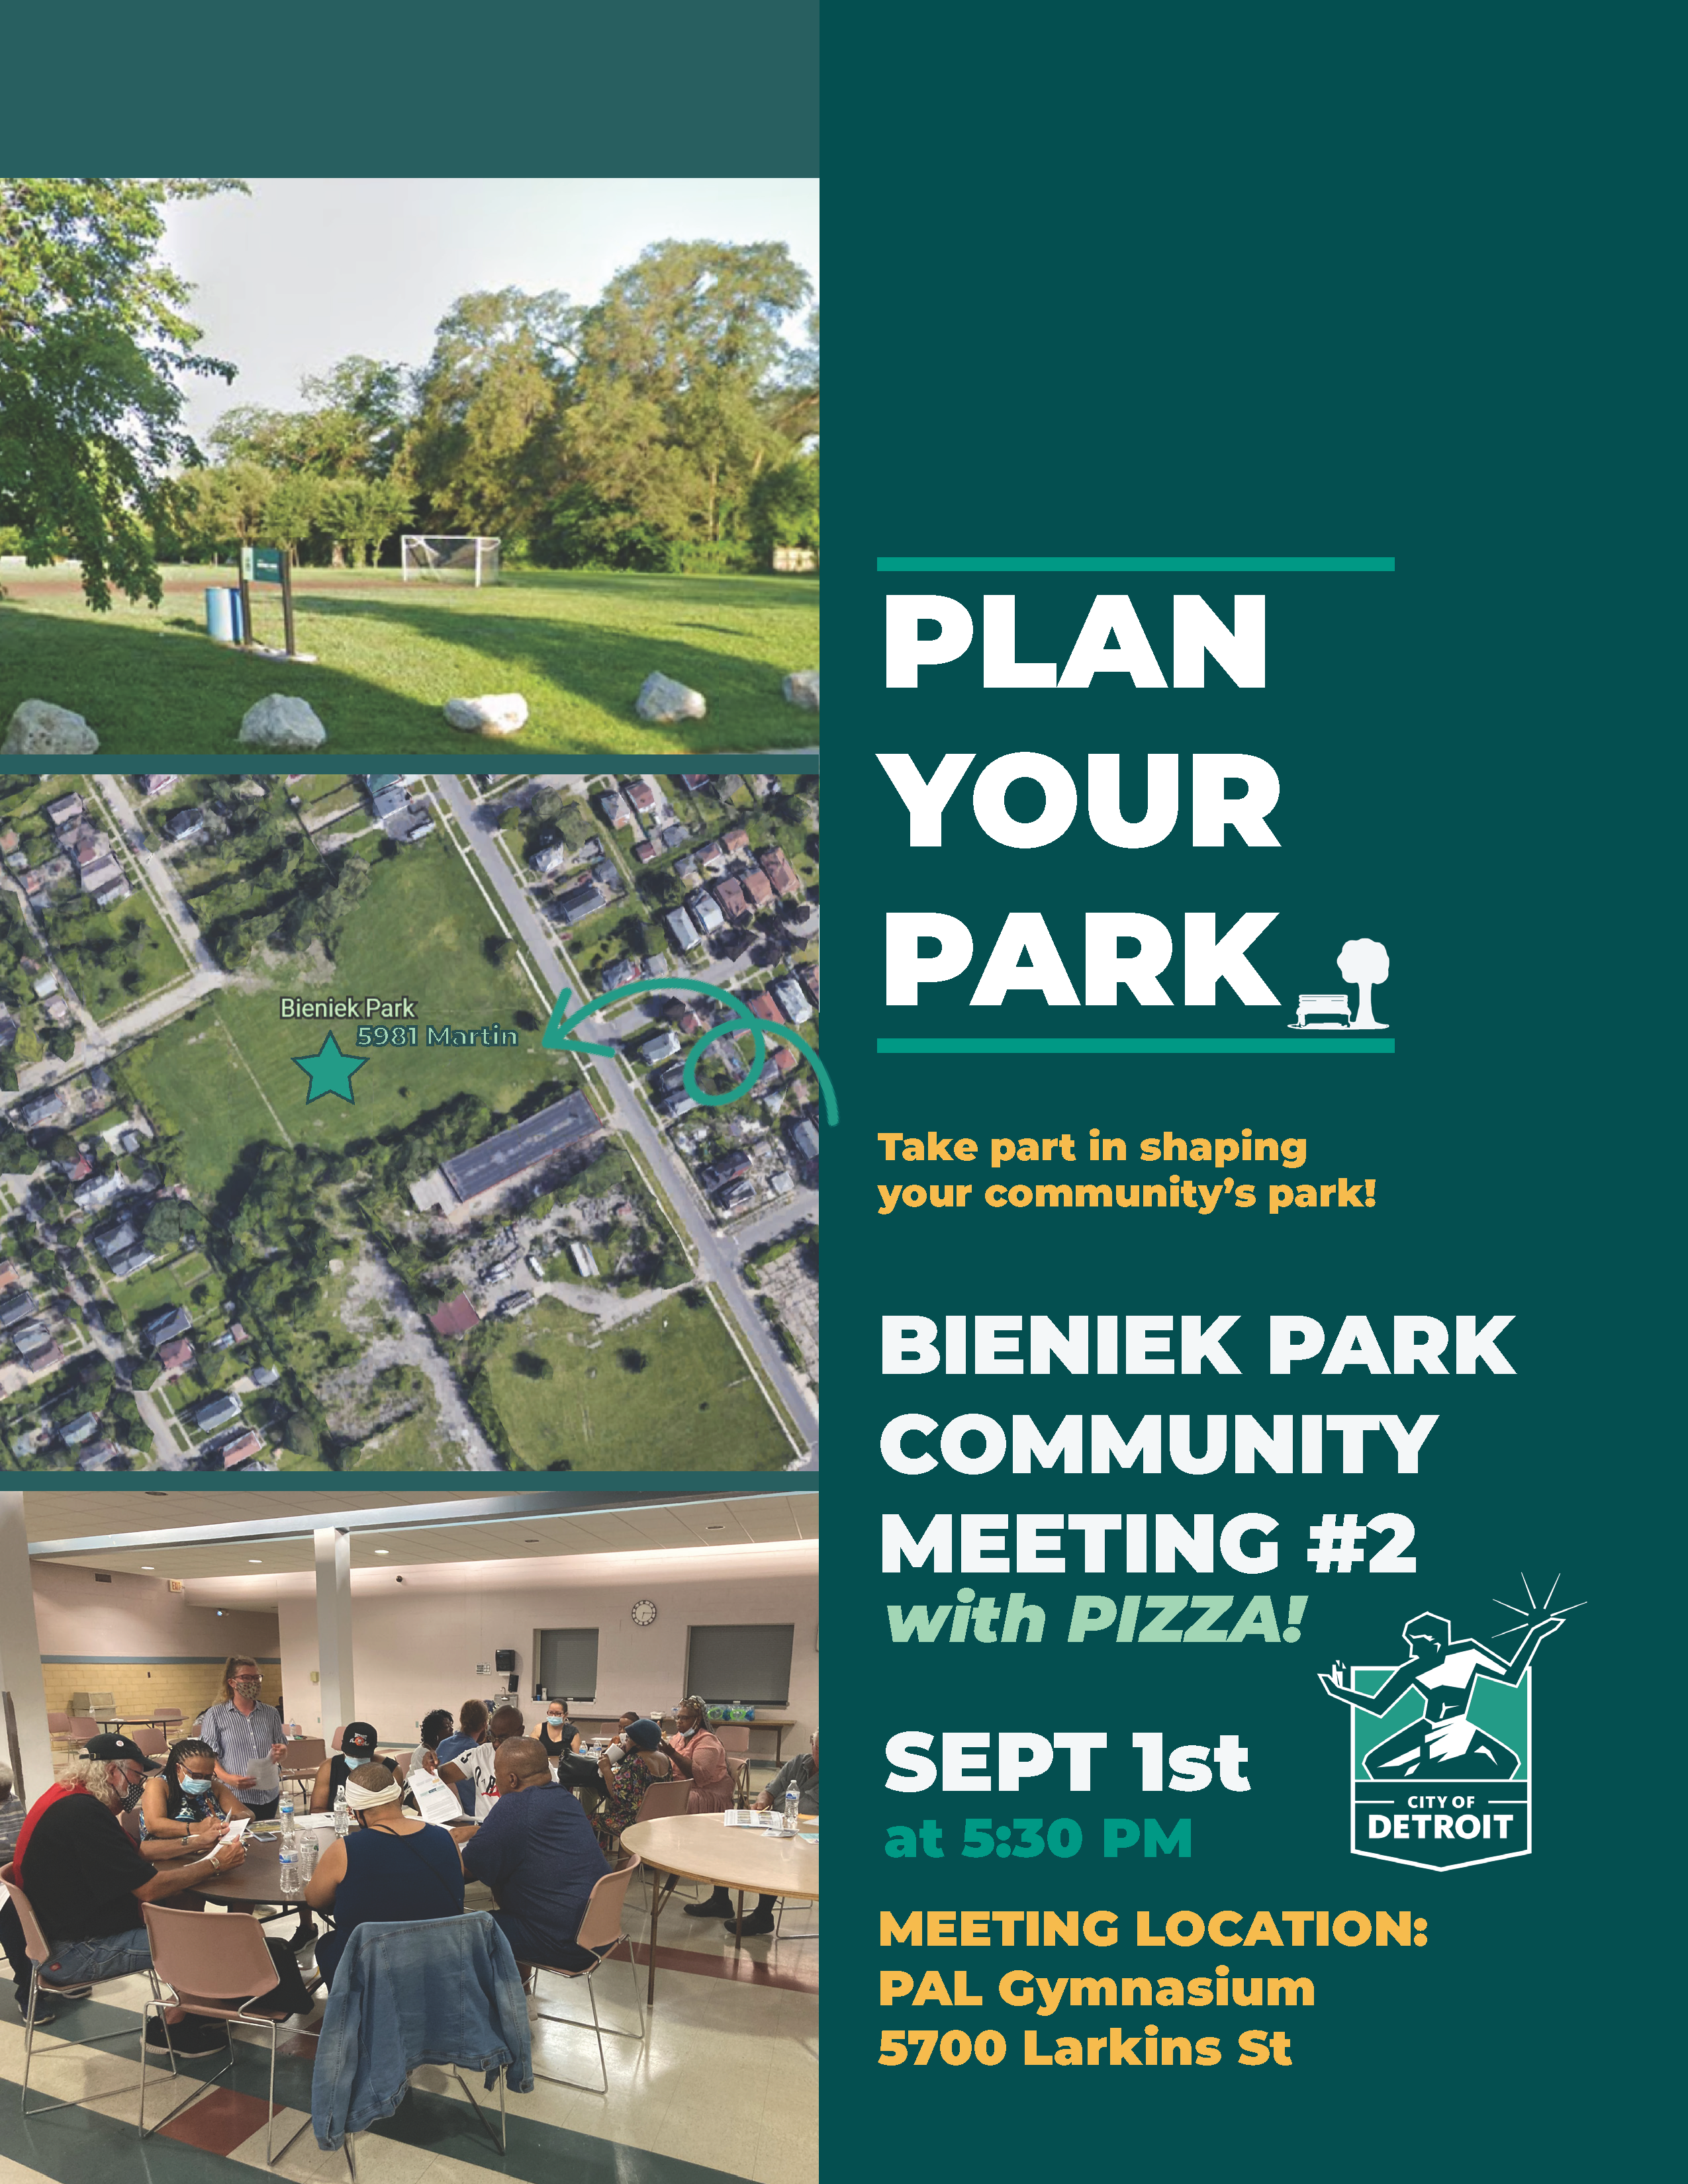 PLAN YOUR PARK: Bieniek Park Community Meeting #1 with Pizza &amp; Kids activities! Sept 1st at 5:30pm. Location: PAL Gymnasium 5700 Larkins St.